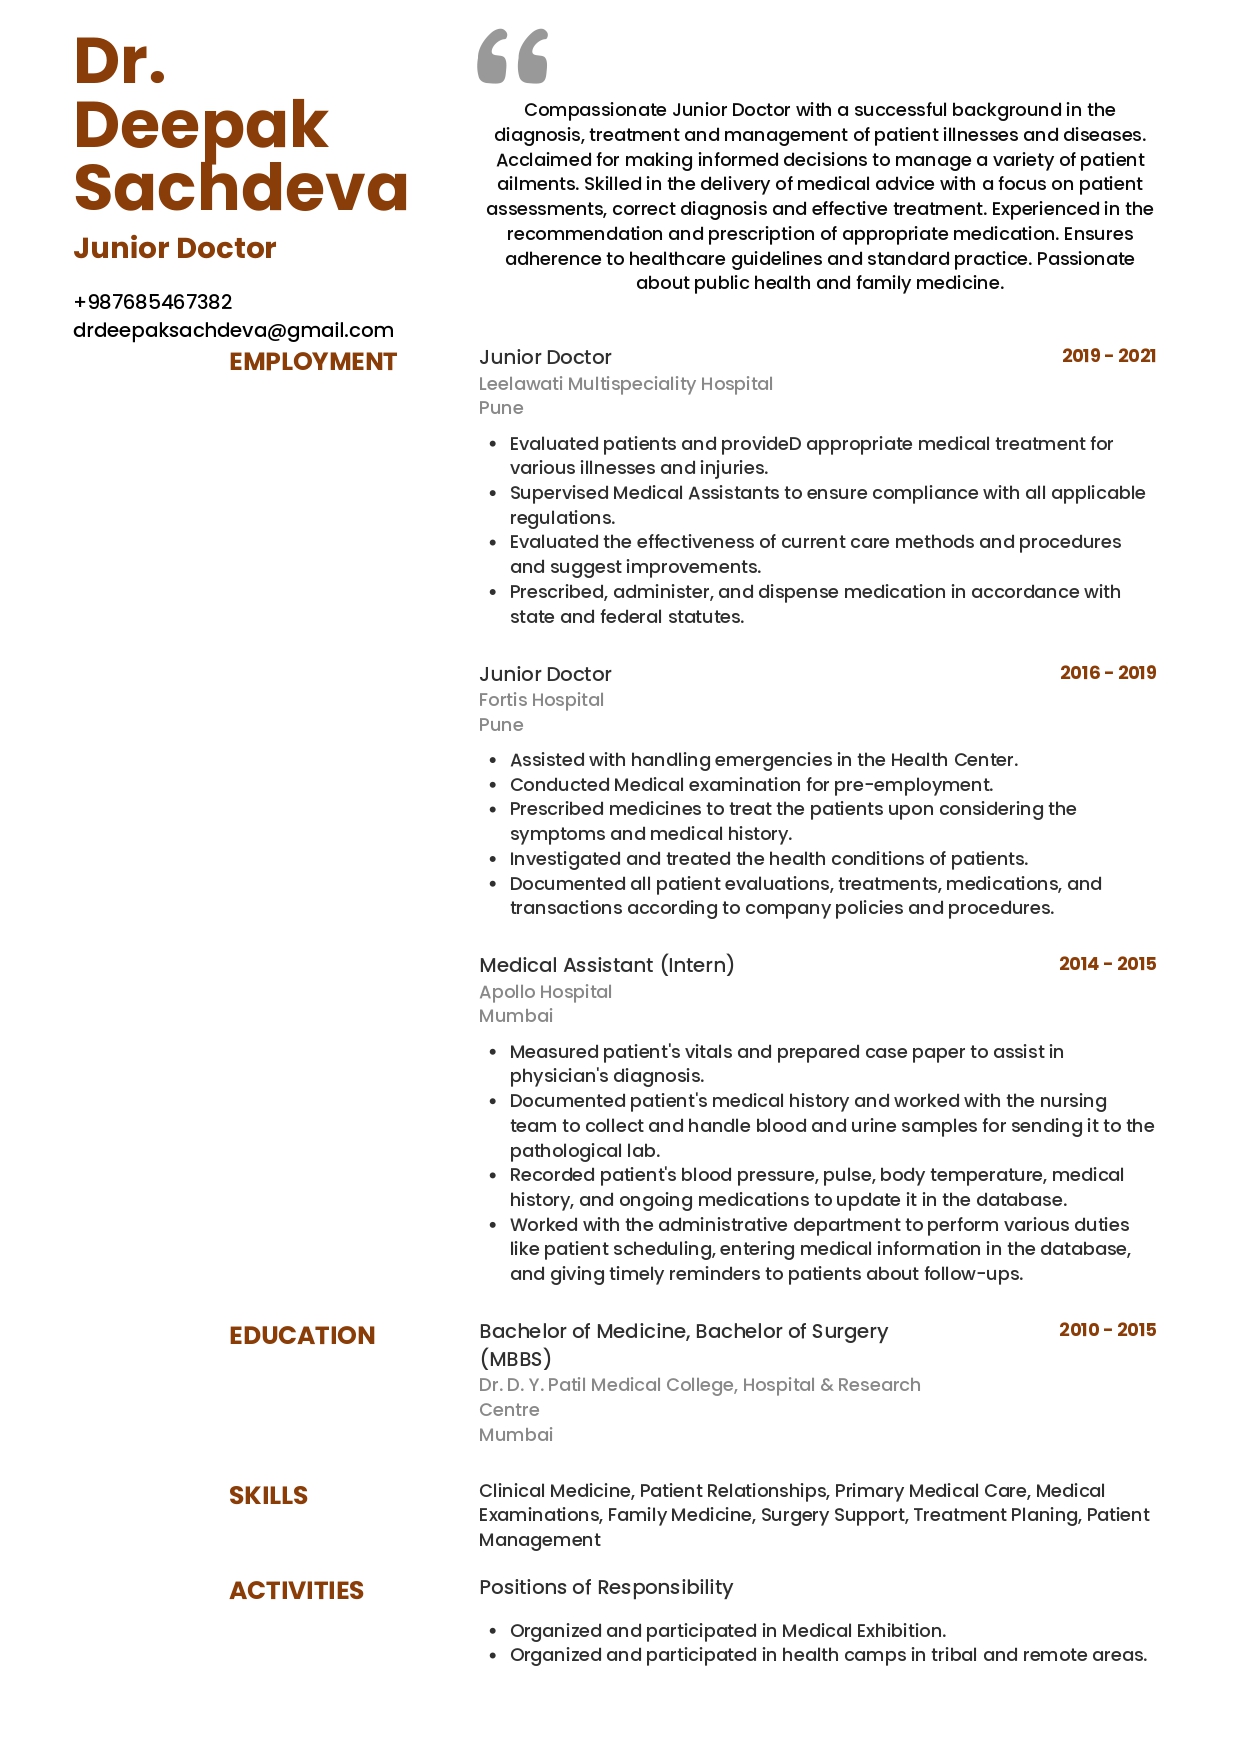 Sample Resume of Junior Doctor | Free Resume Templates & Samples on Resumod.co